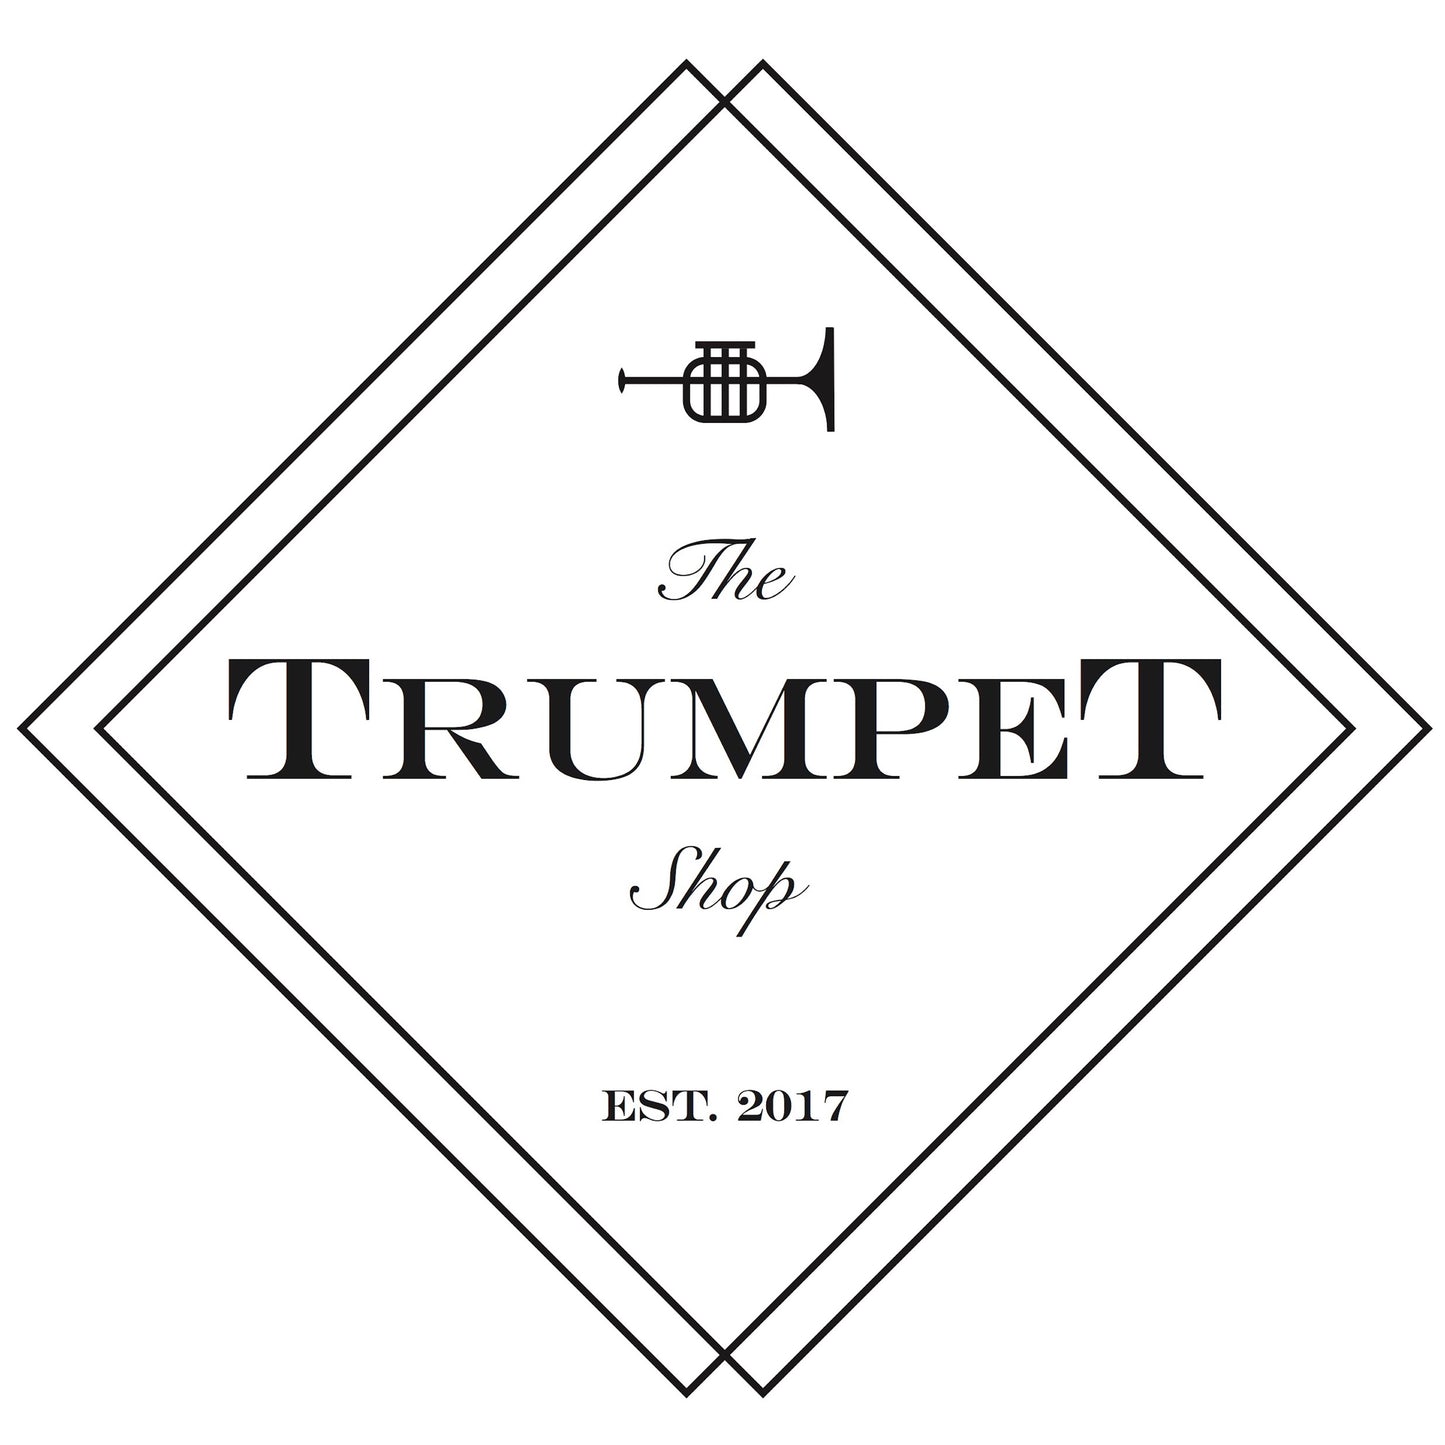 The Trumpet Shop e-Gift Card Gift Cards The Trumpet Shop Vintage Prints   